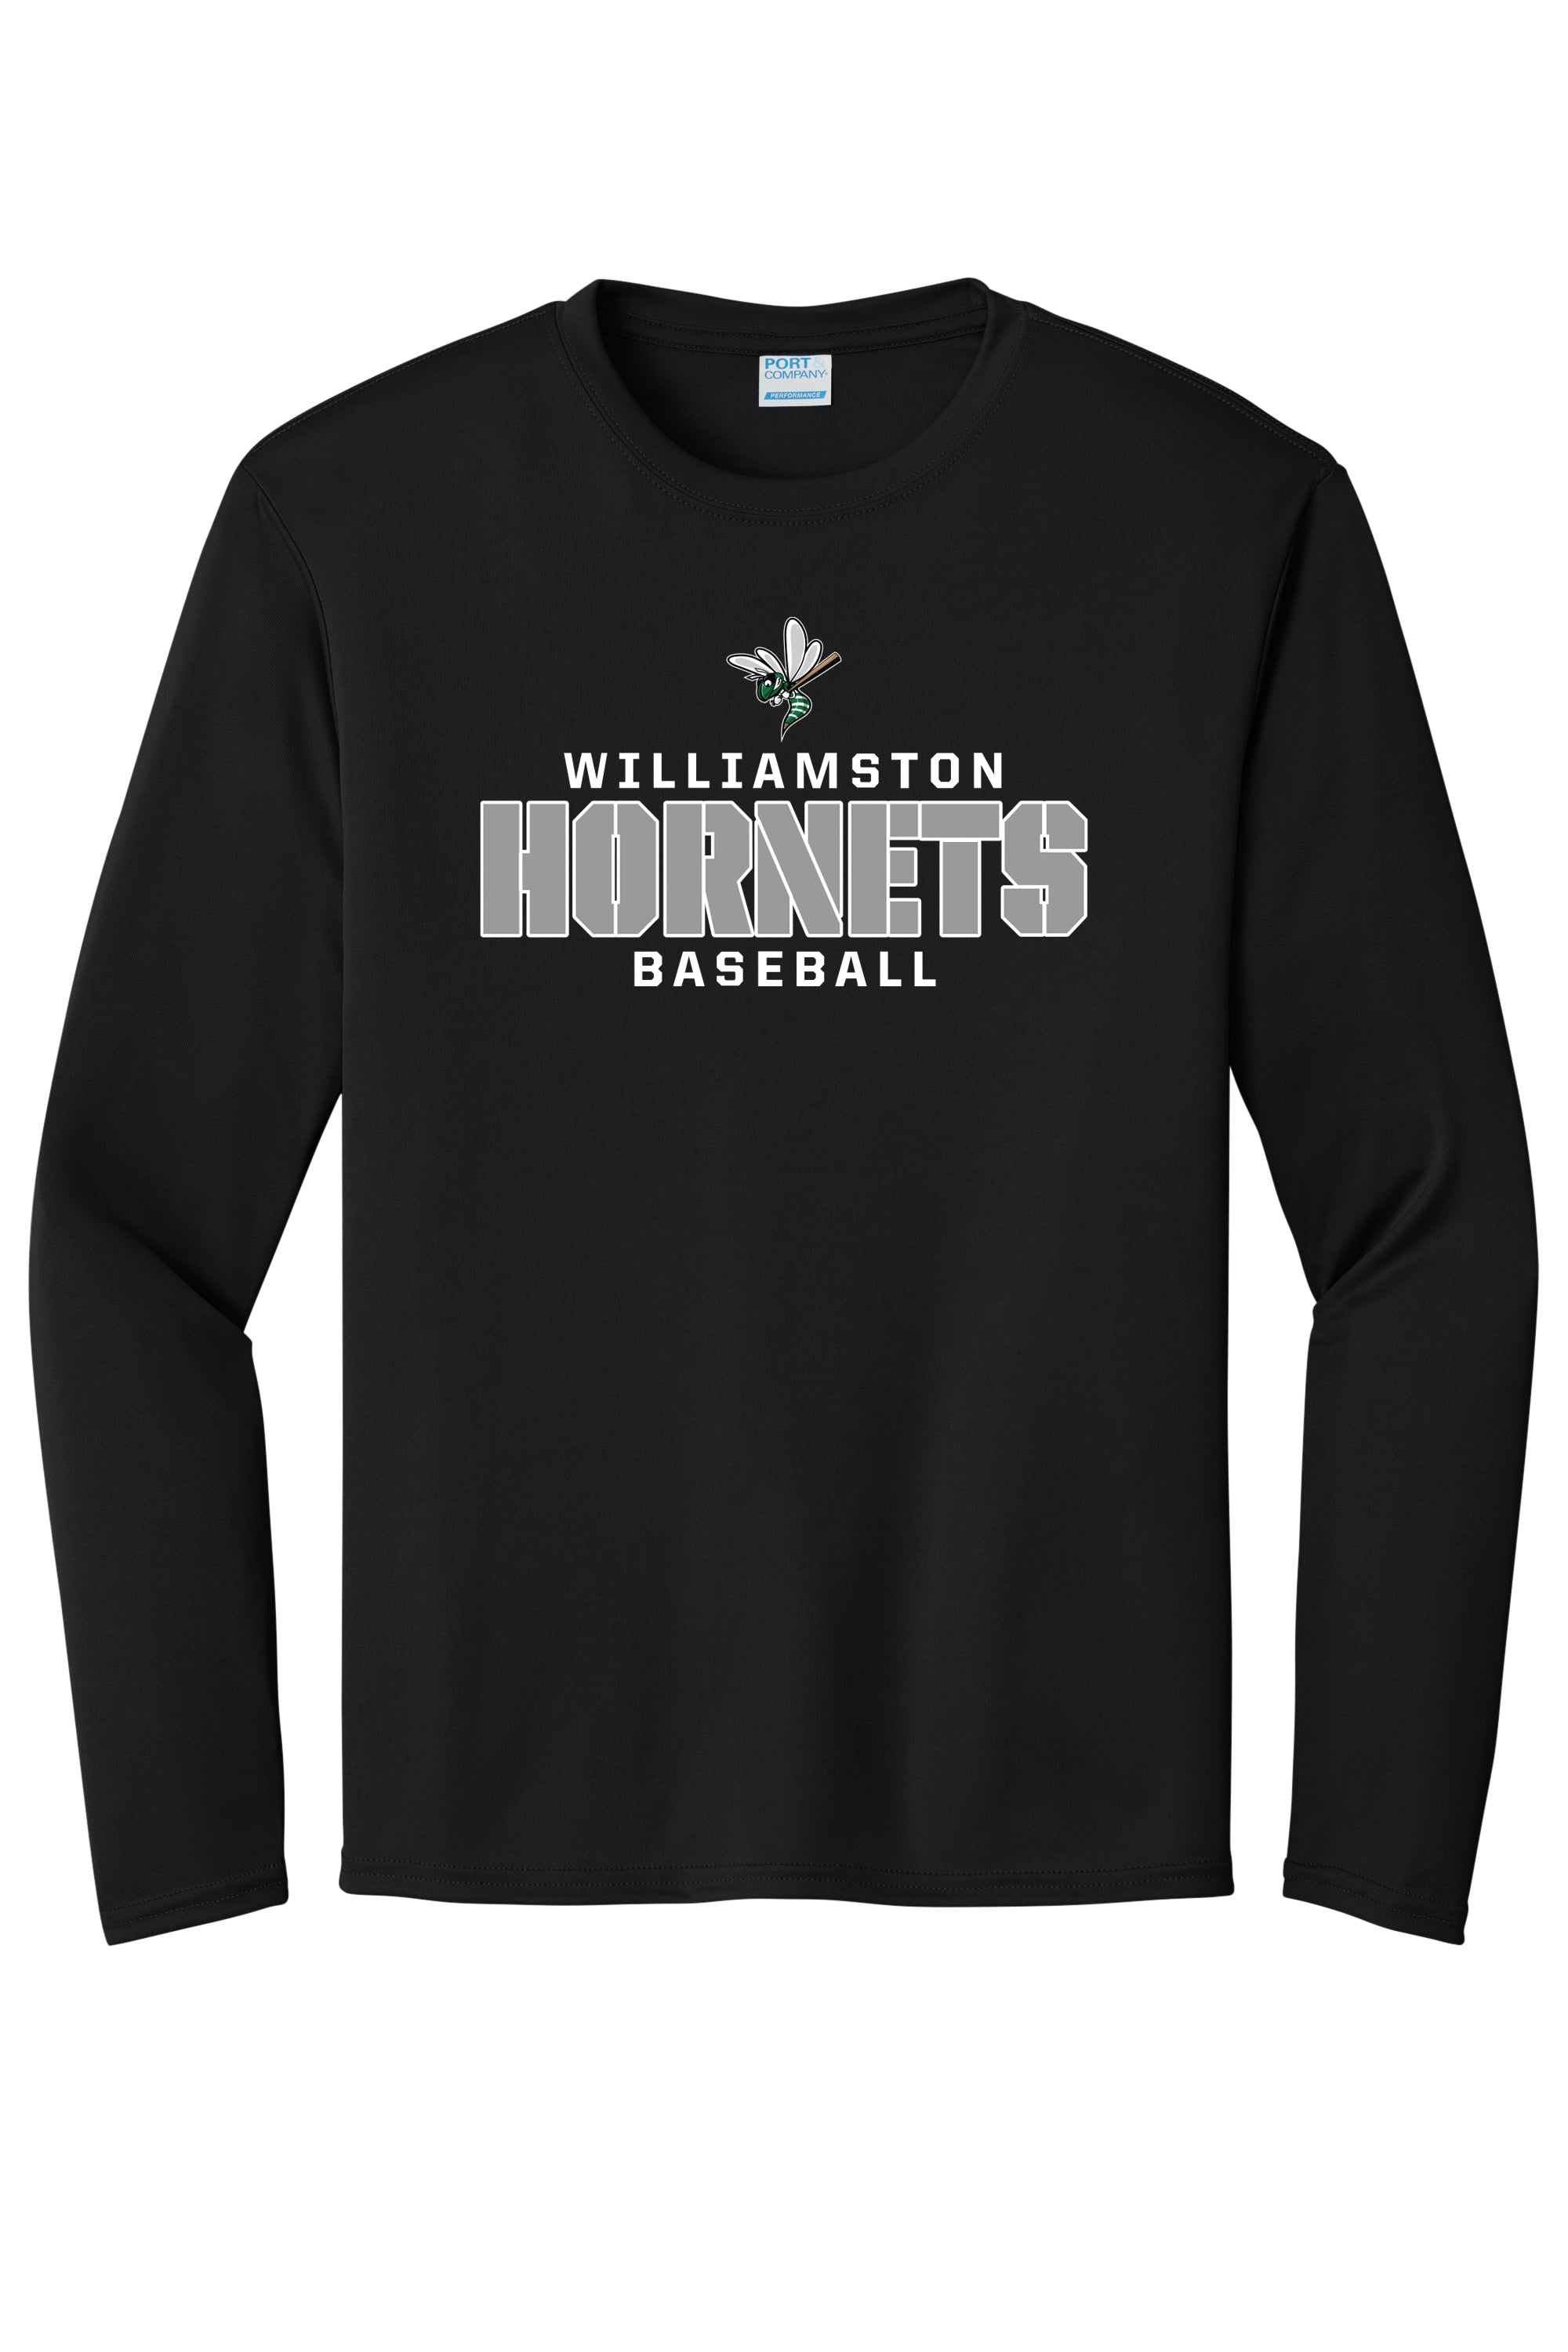 Williamston Baseball - Long Sleeve Tee